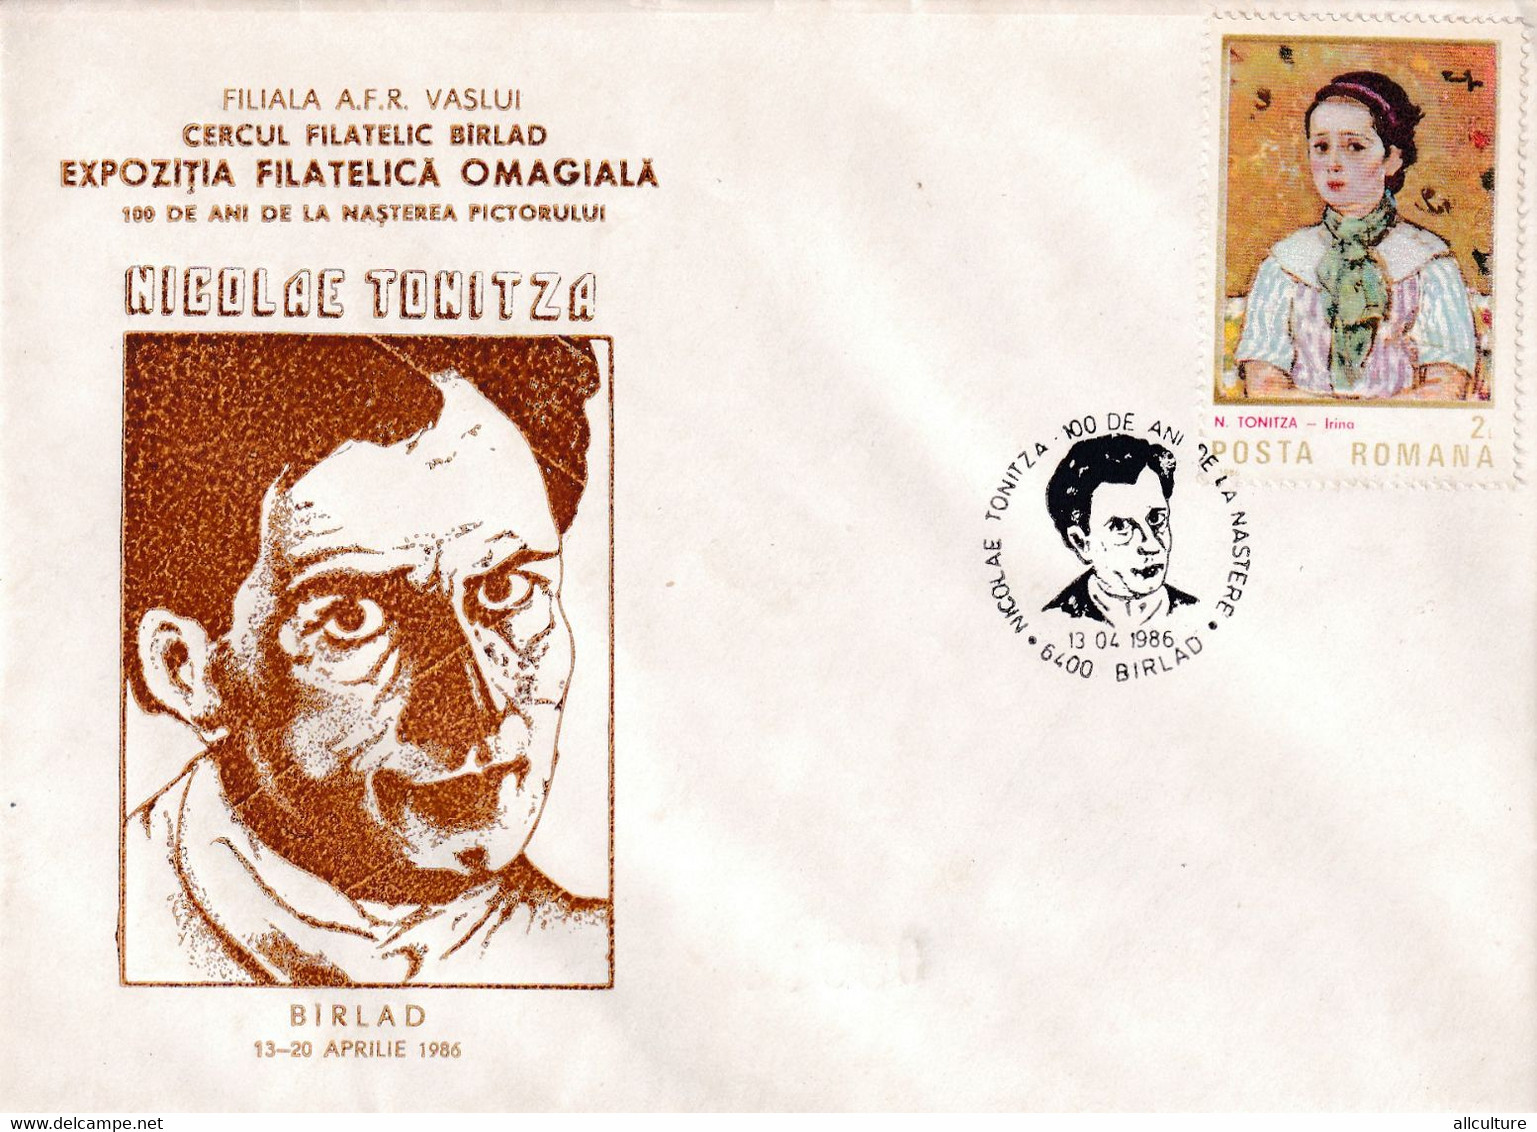 A2997 - Nicolae Tonitza, Pictor Roman, Expozitia Filatelica Omagiala, Vaslui Barlad 1986 Romania Posta Romana - Covers & Documents